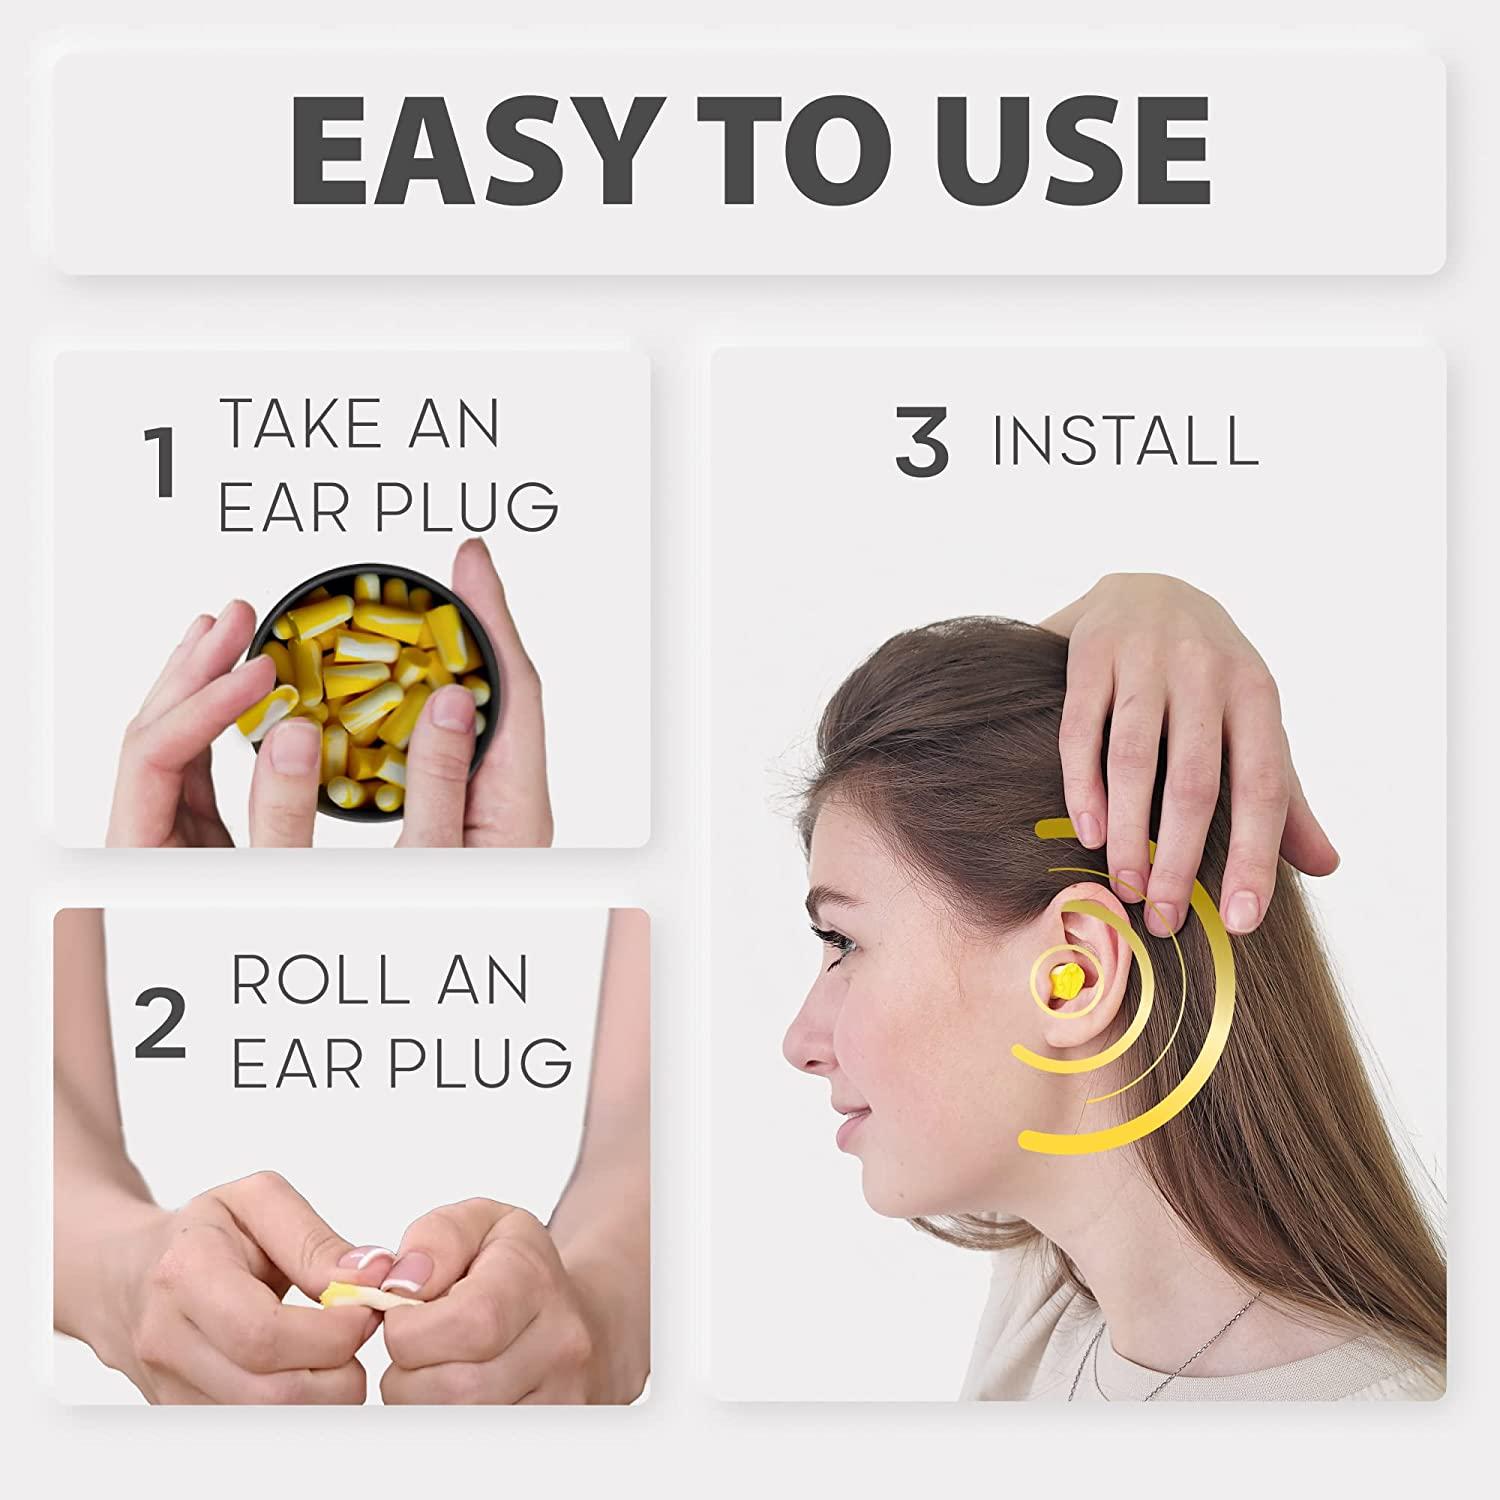 PQ Wax Ear Plugs for Sleep - 15 Silicone Wax Earplugs for Sleeping